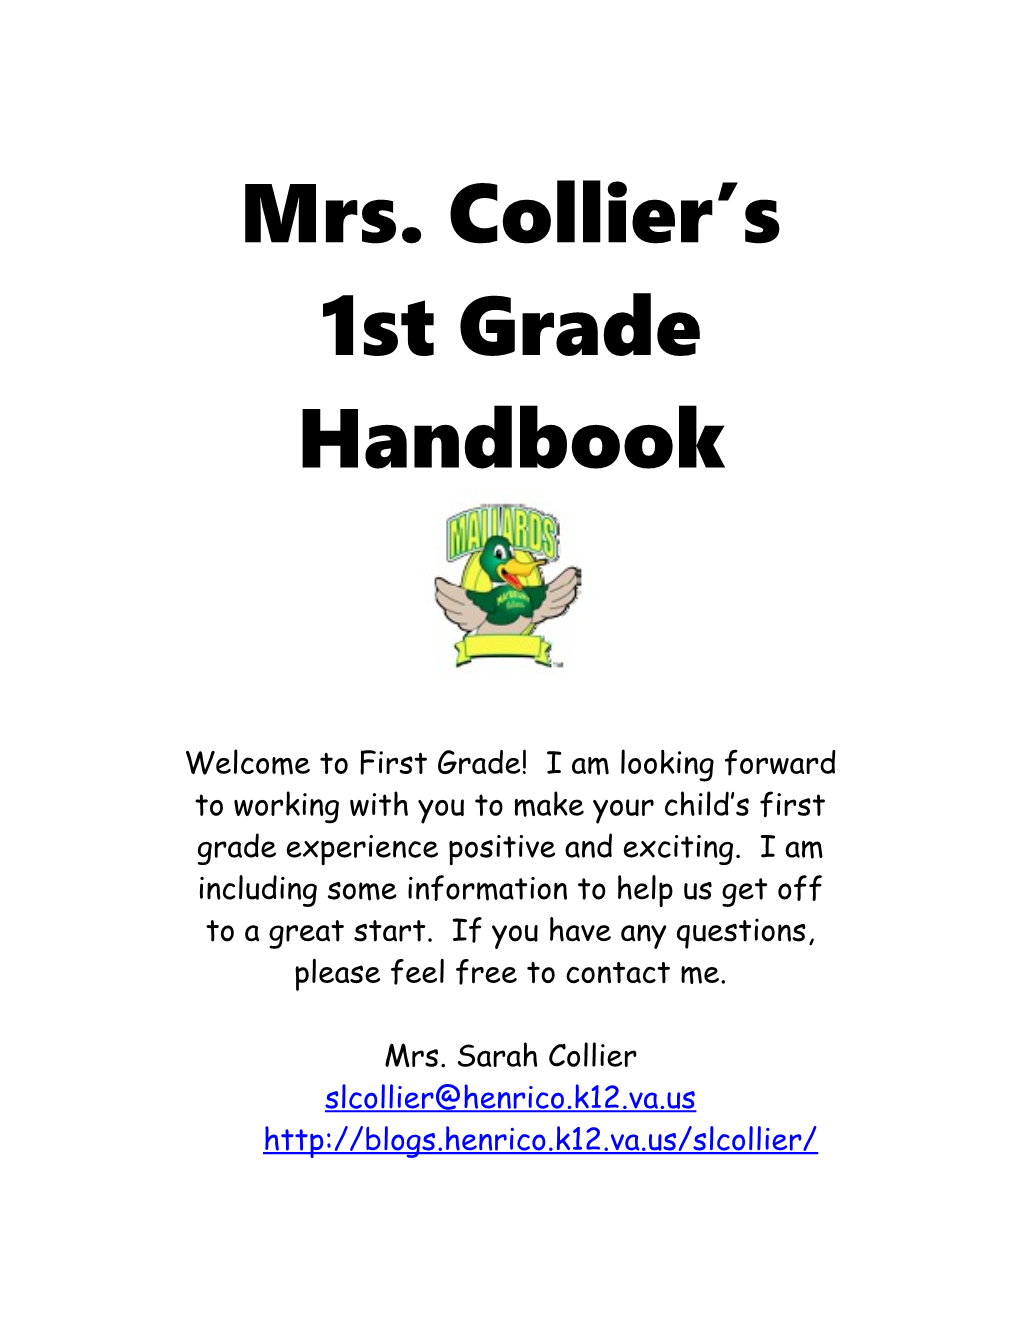 Mrs. Collier S 1St Grade Handbook